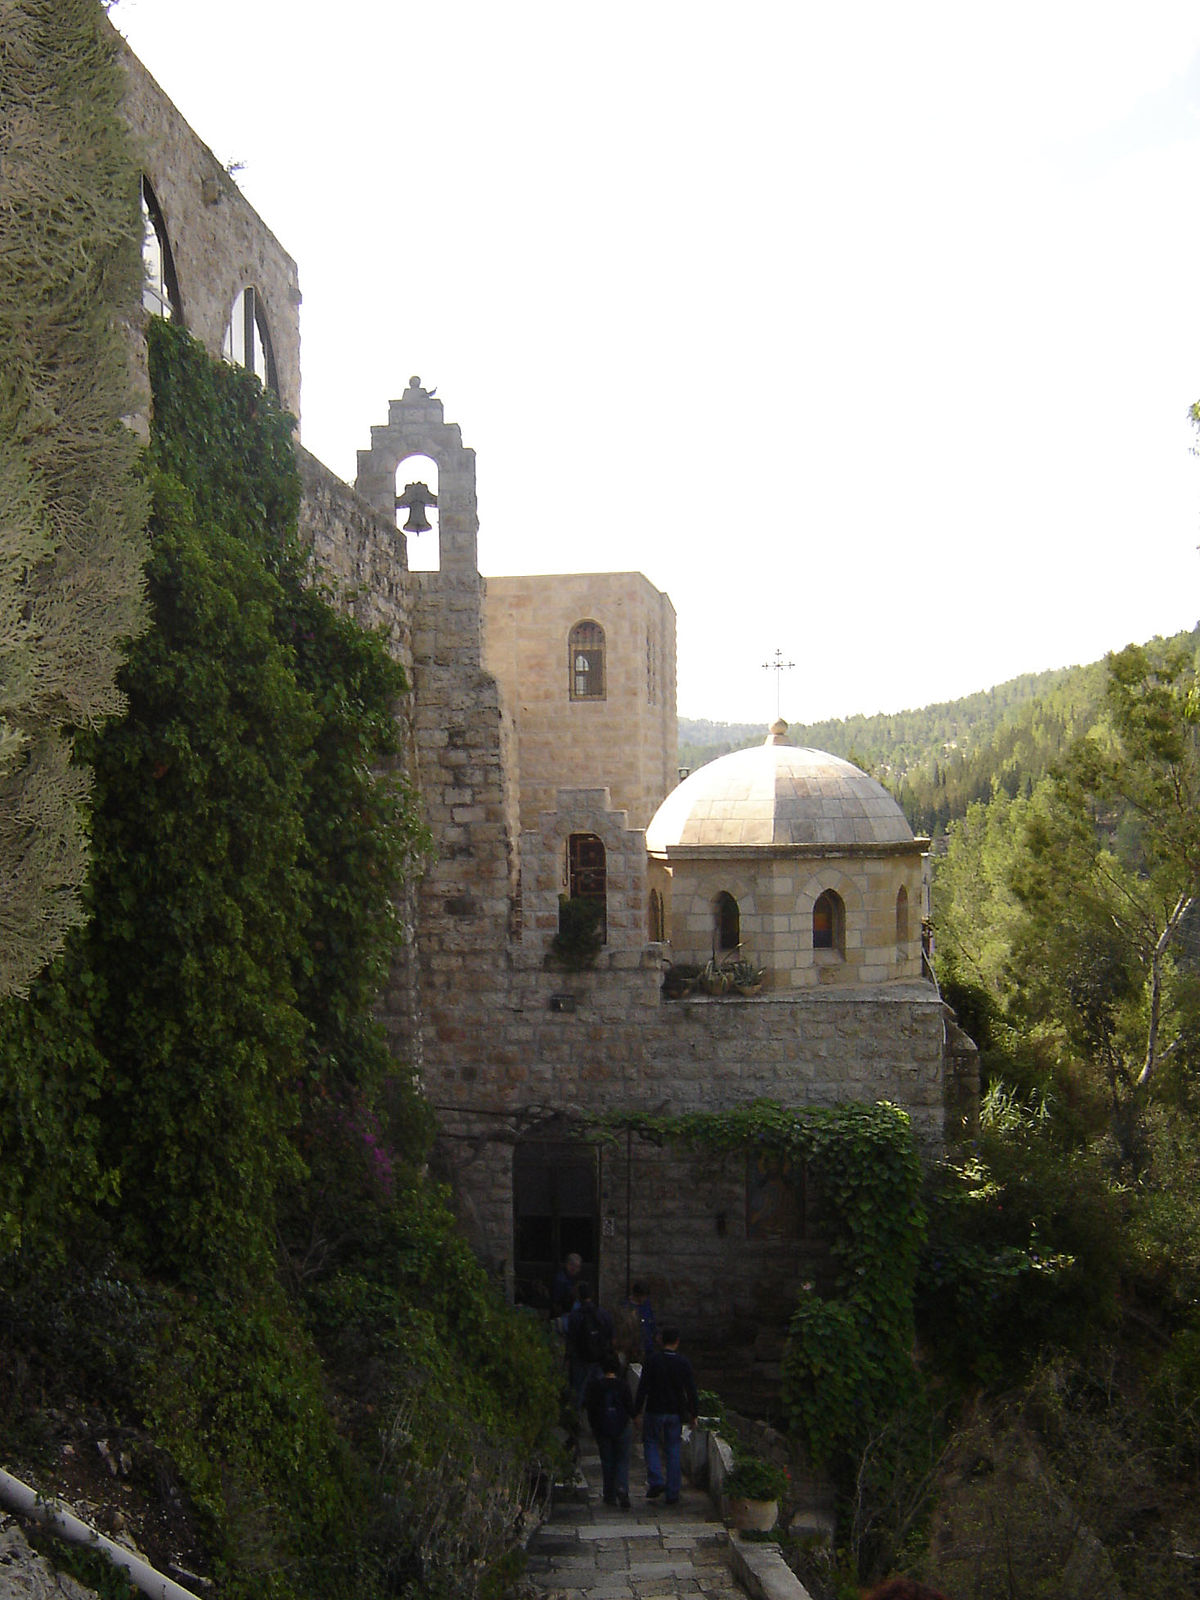 Monastery of Saint John in the Wilderness - Wikipedia